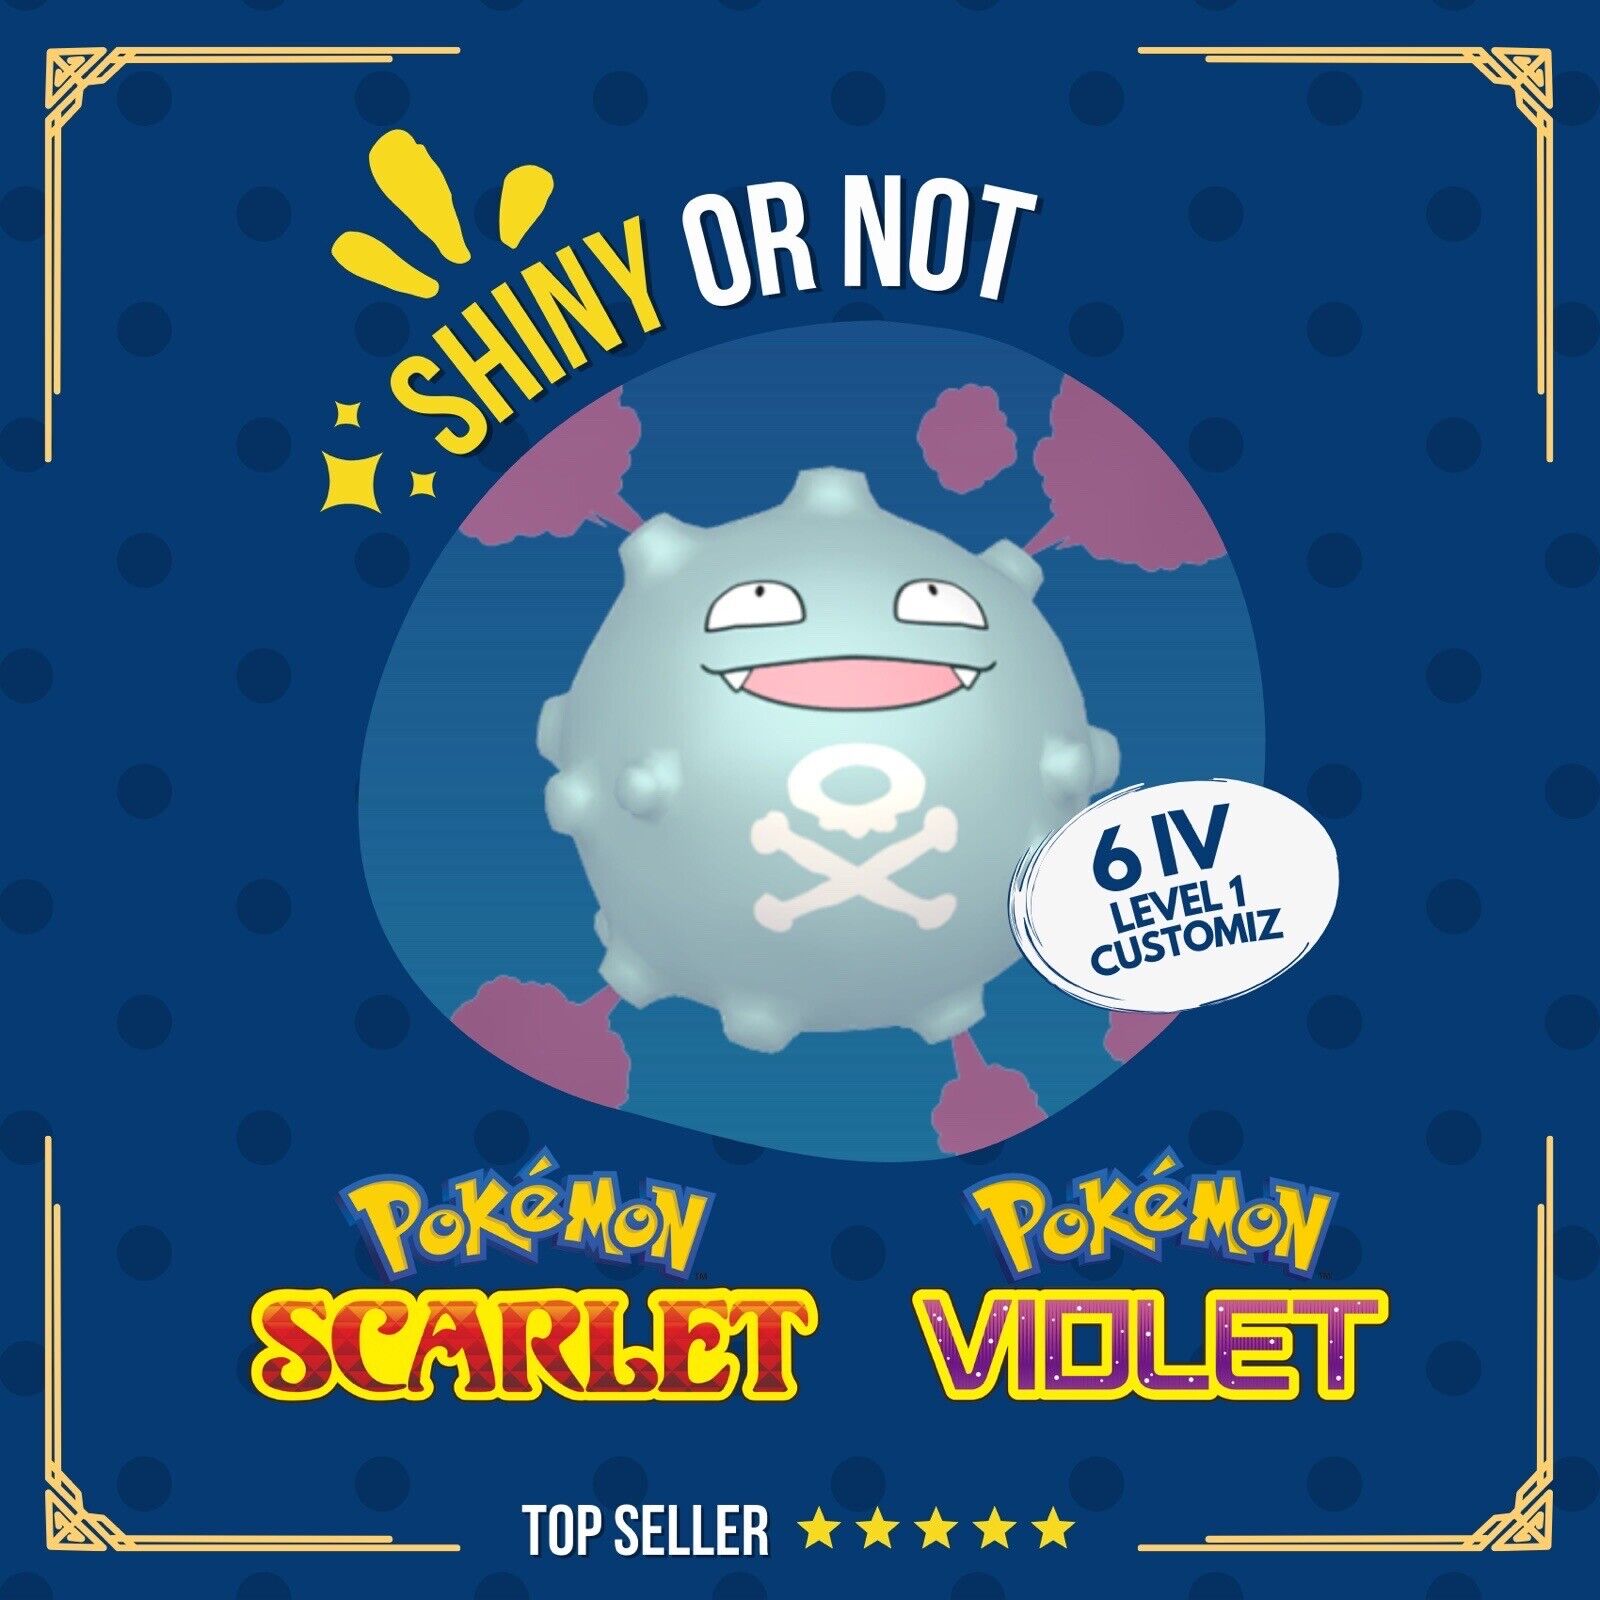 Koffing Shiny or Non ✨ 6 IV Customizable Nature Level OT Pokémon Scarlet Violet by Shiny Living Dex | Shiny Living Dex